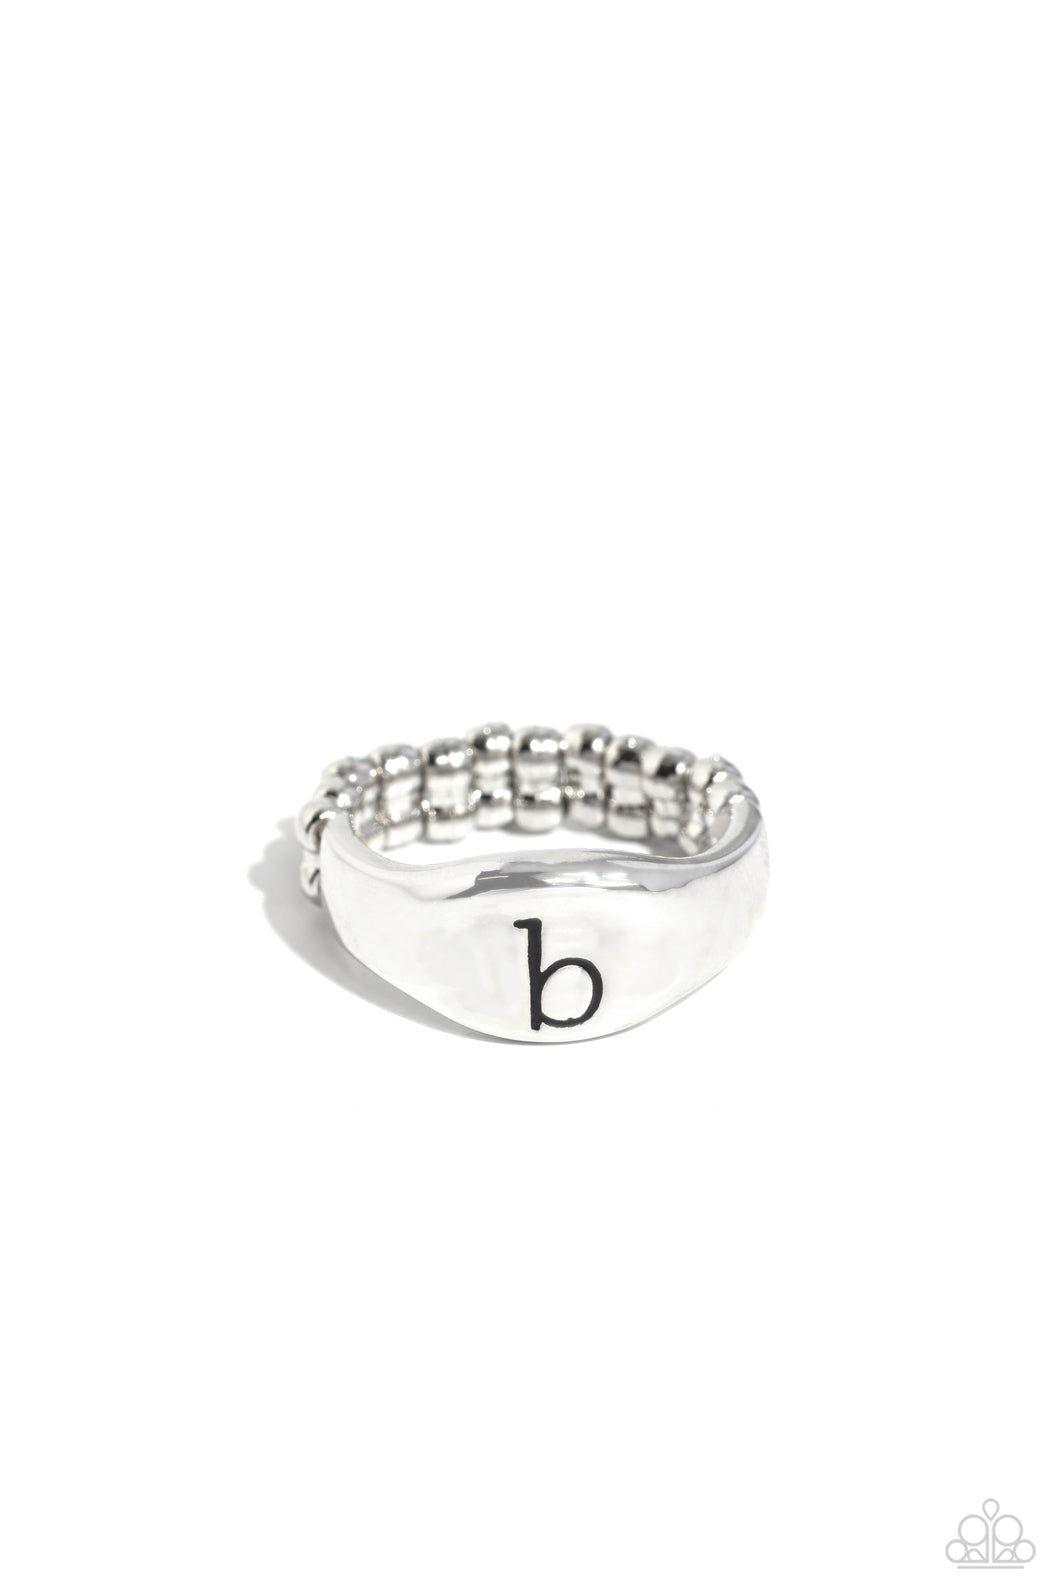 Monogram Memento - Silver - B Initial Ring